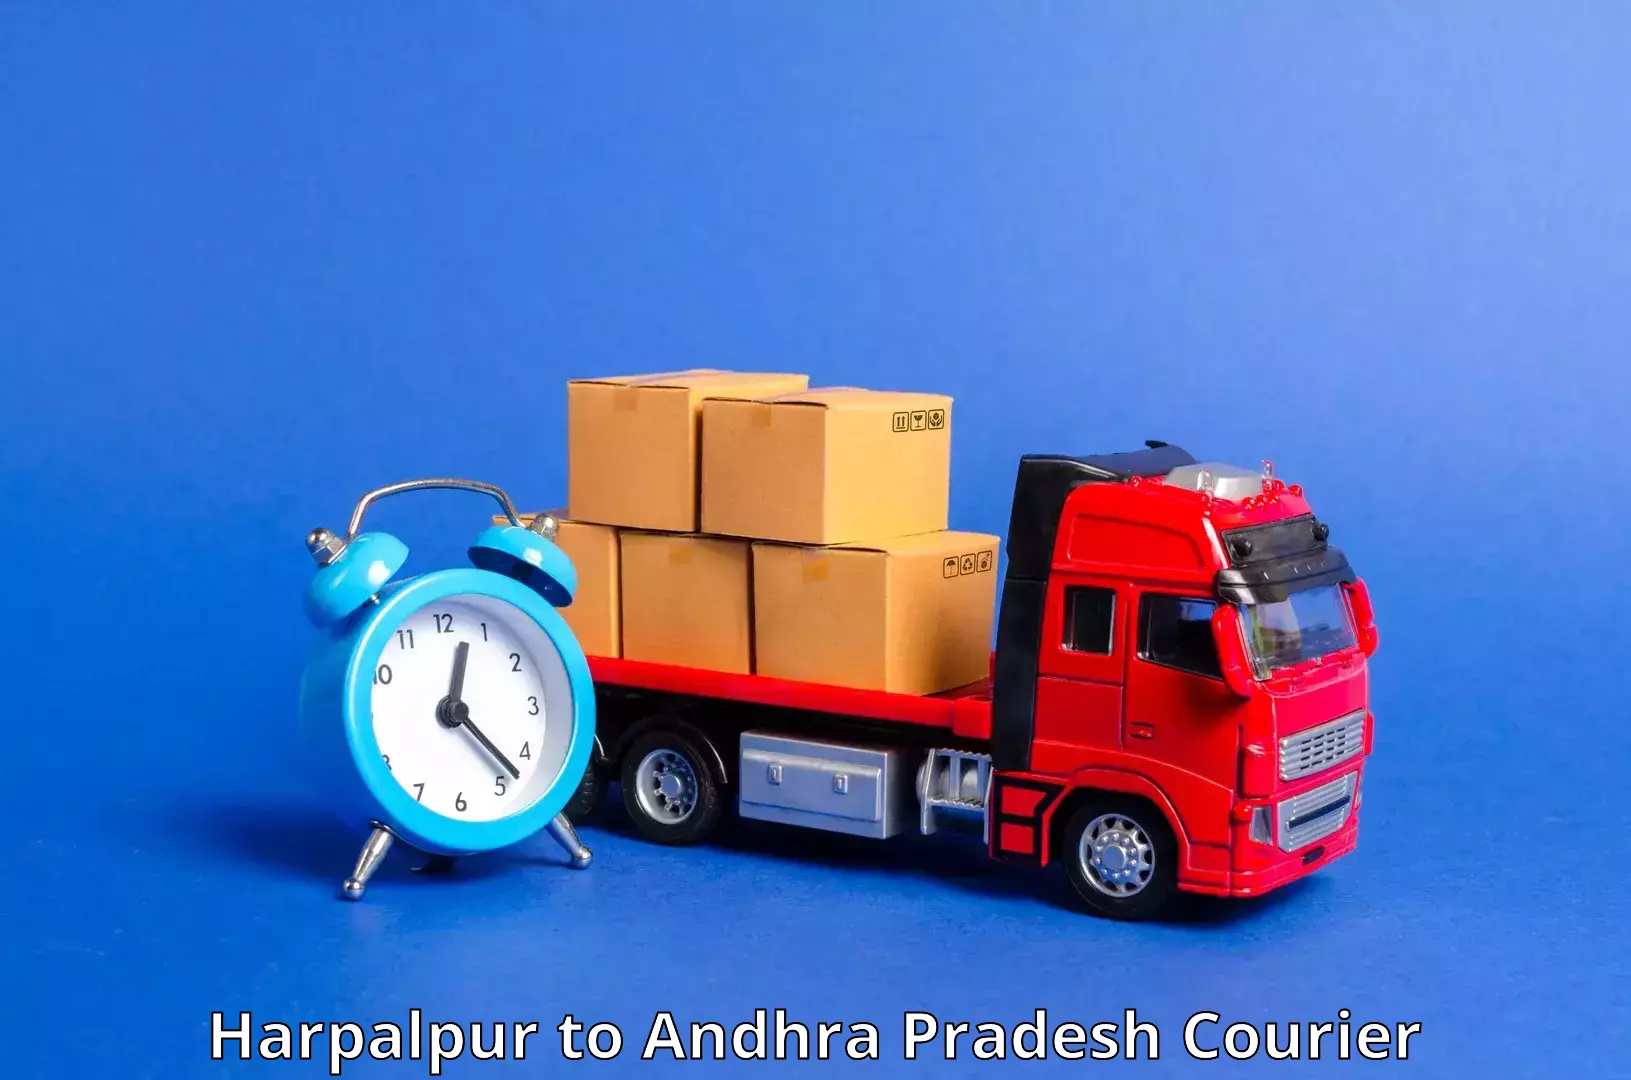 Courier membership Harpalpur to Visakhapatnam Port